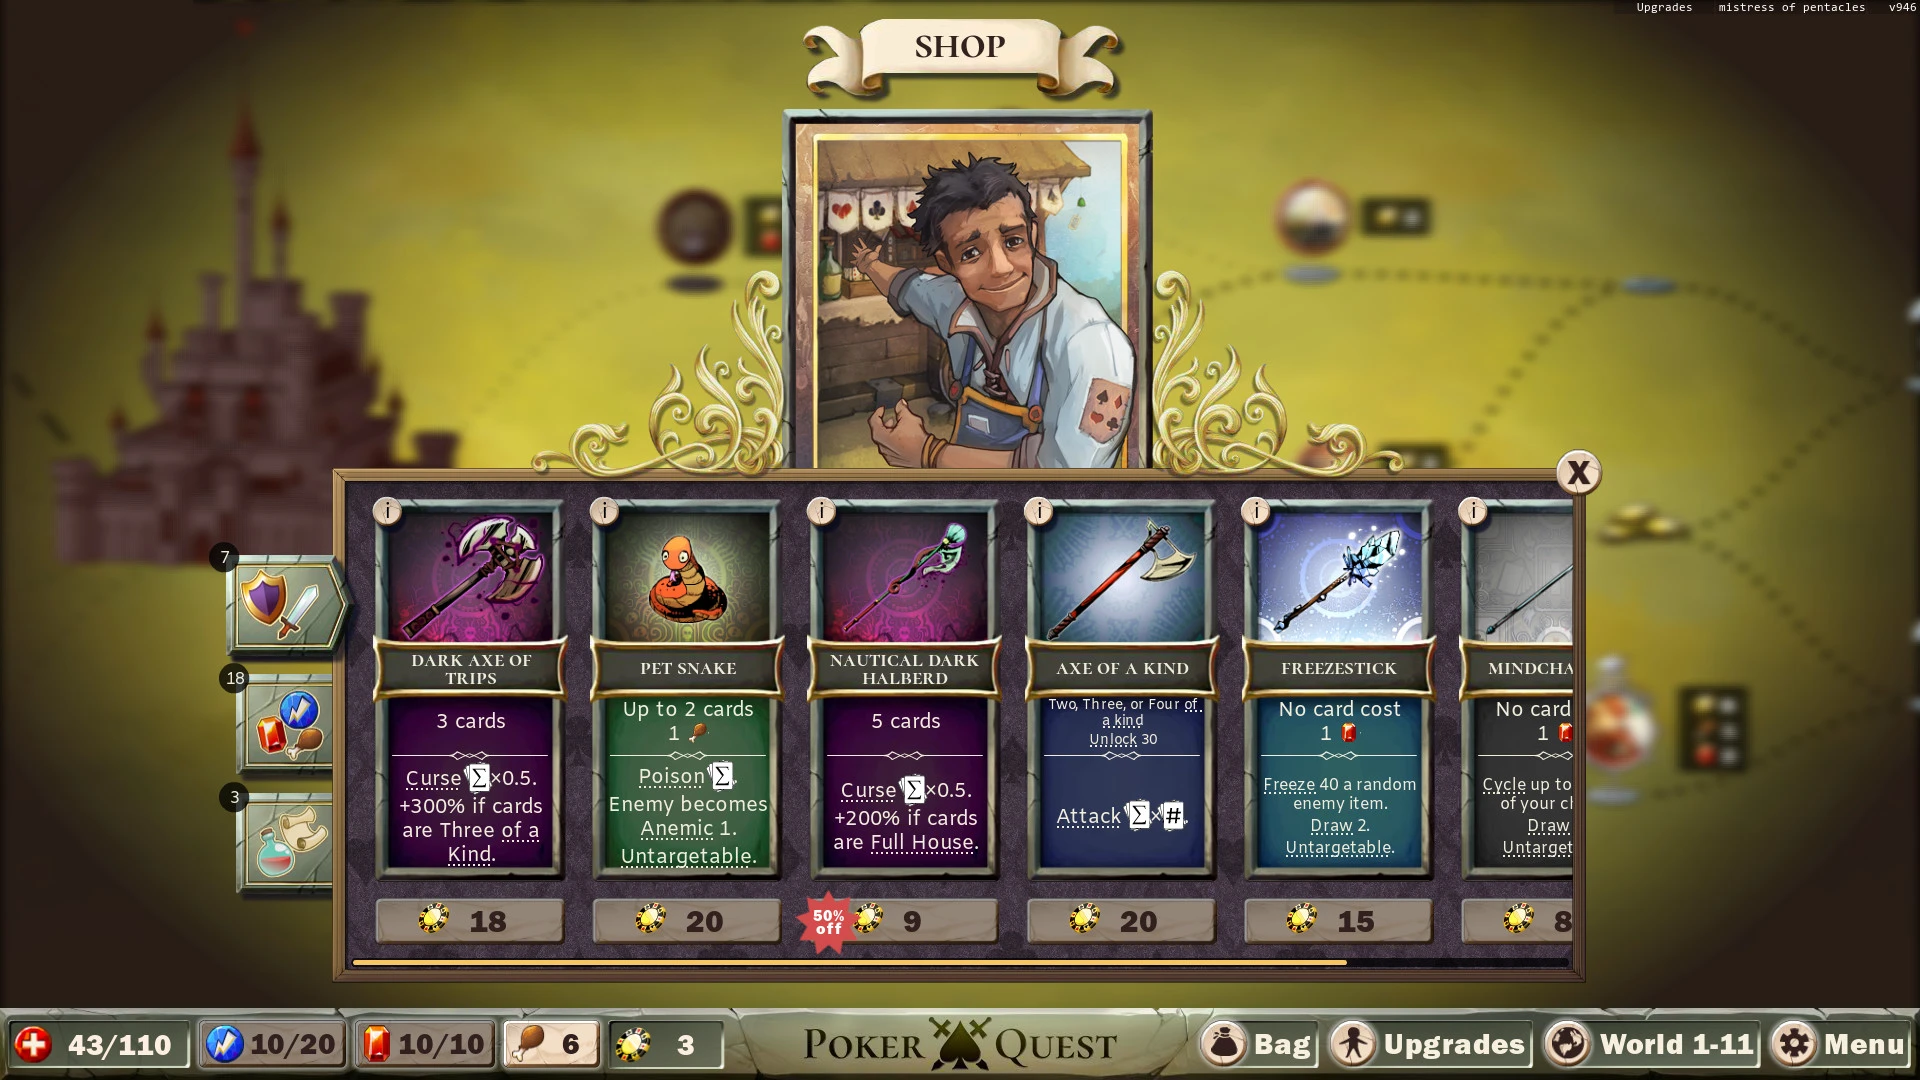 Poker Quest Screenshot of Shop